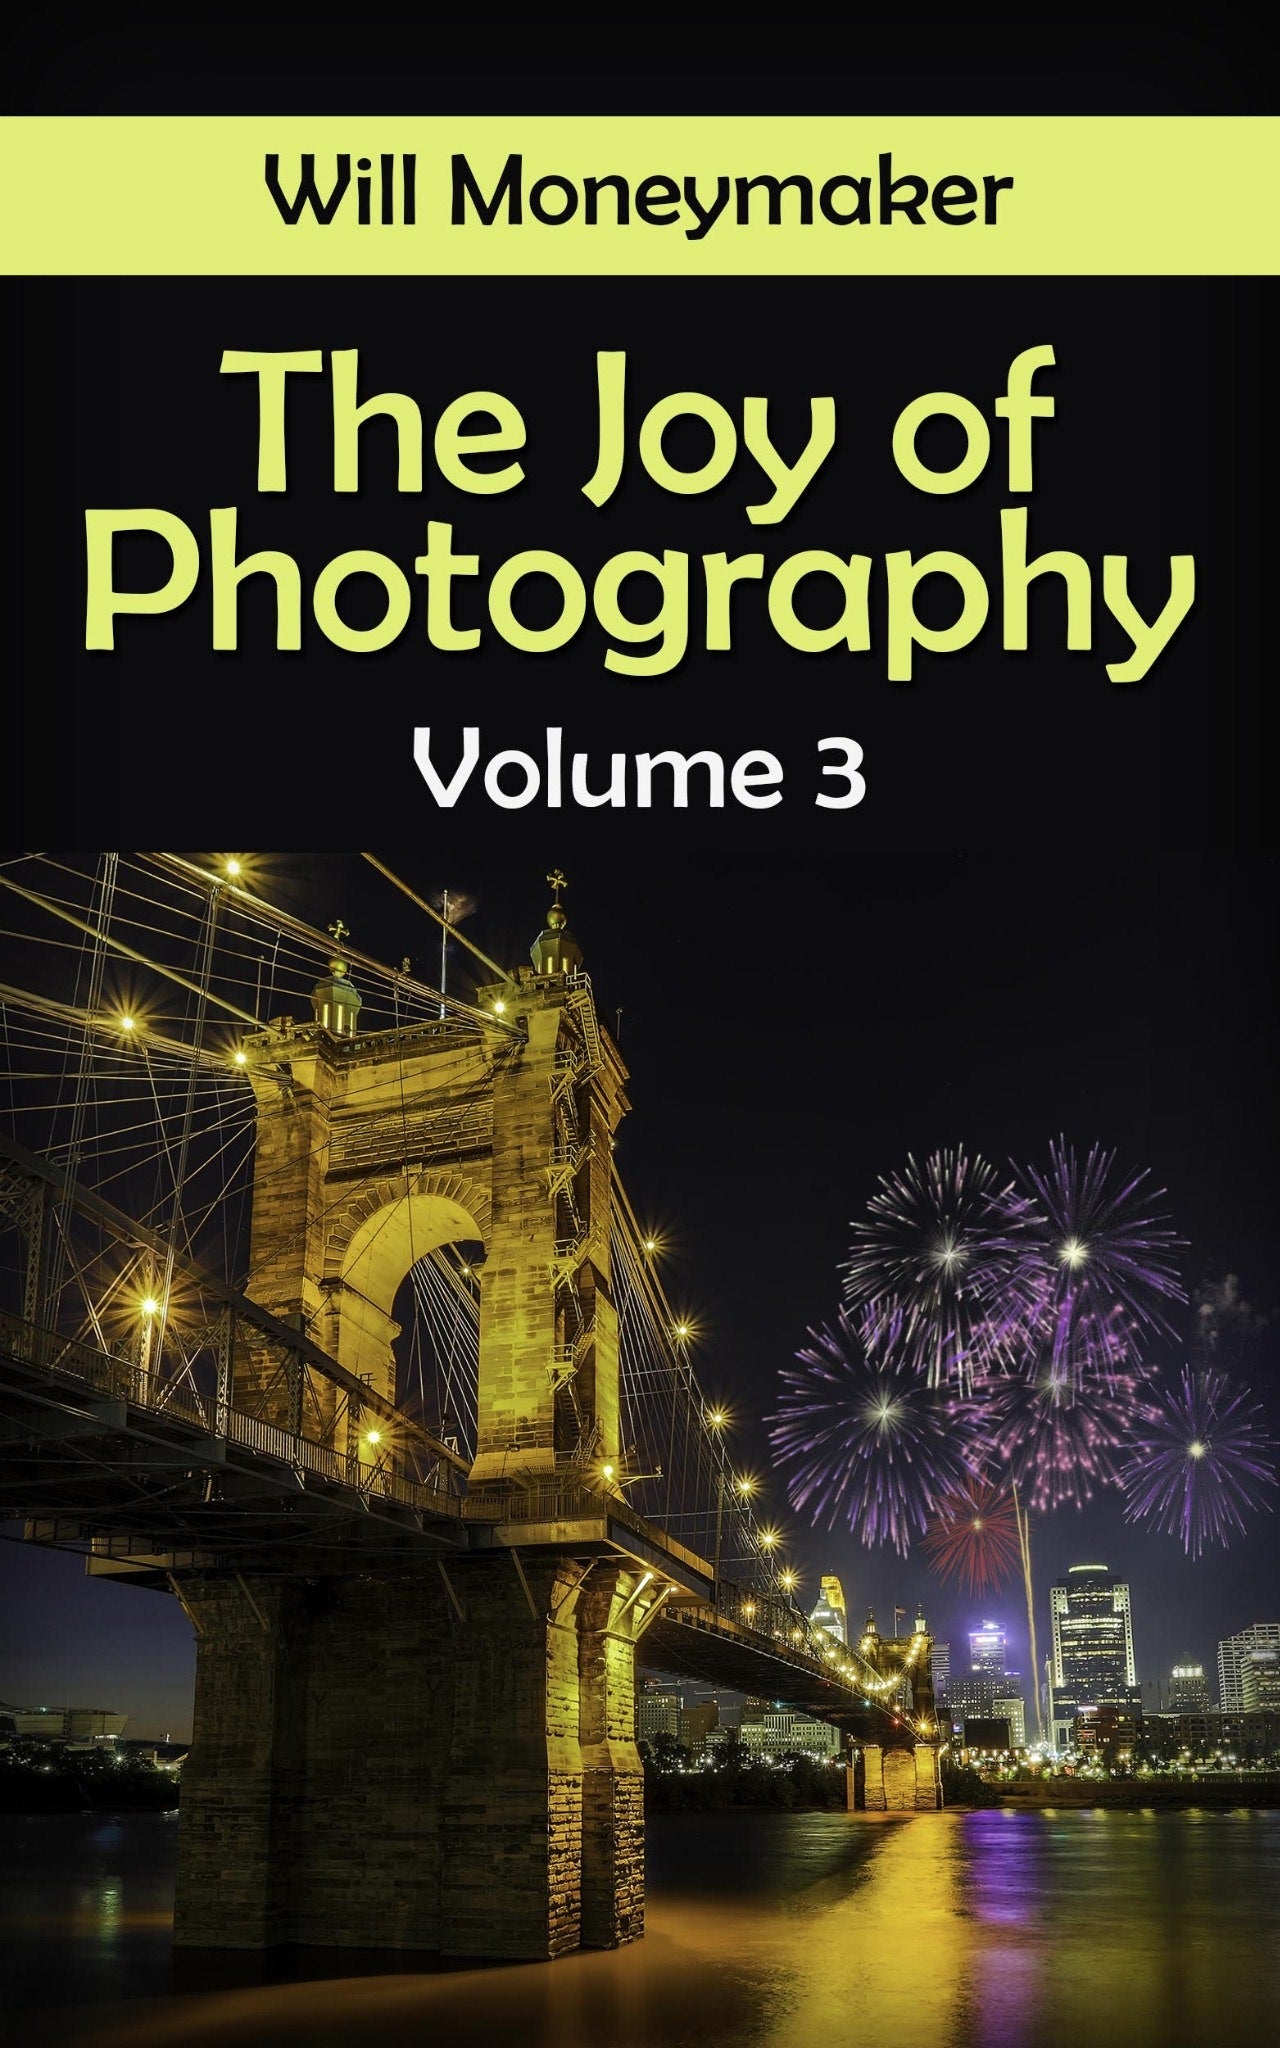 The Joy of Photography Vol. 3